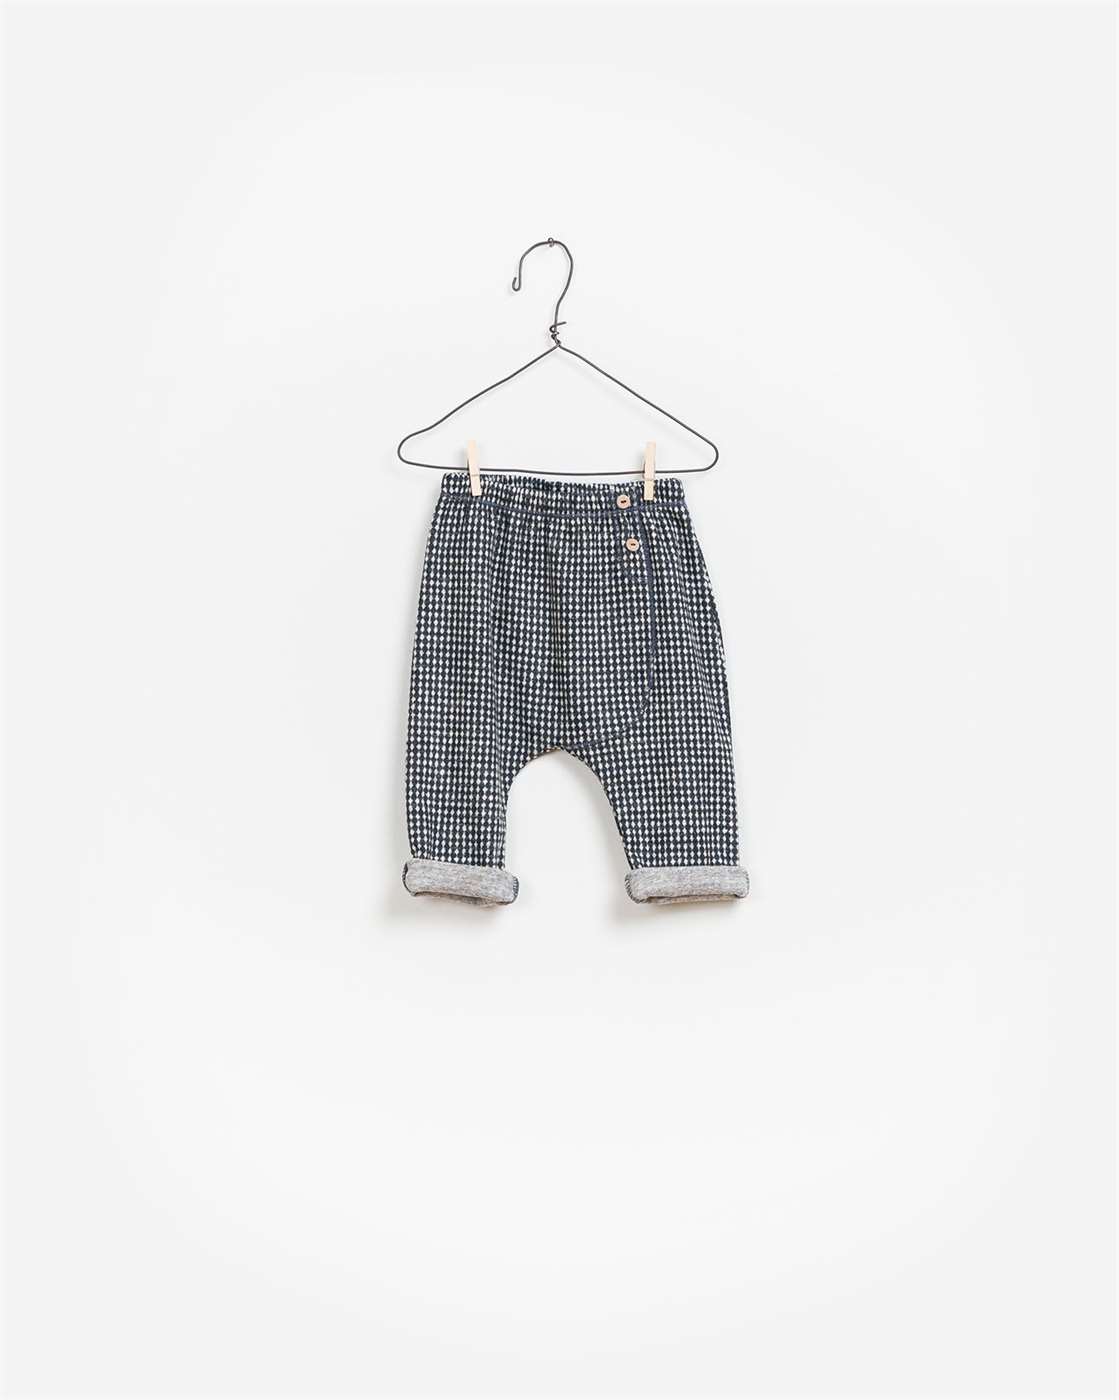 BeeBoo|BeeBoo PlayUp vêtements bébé baby clothes pantalon pants Interlock gris grey